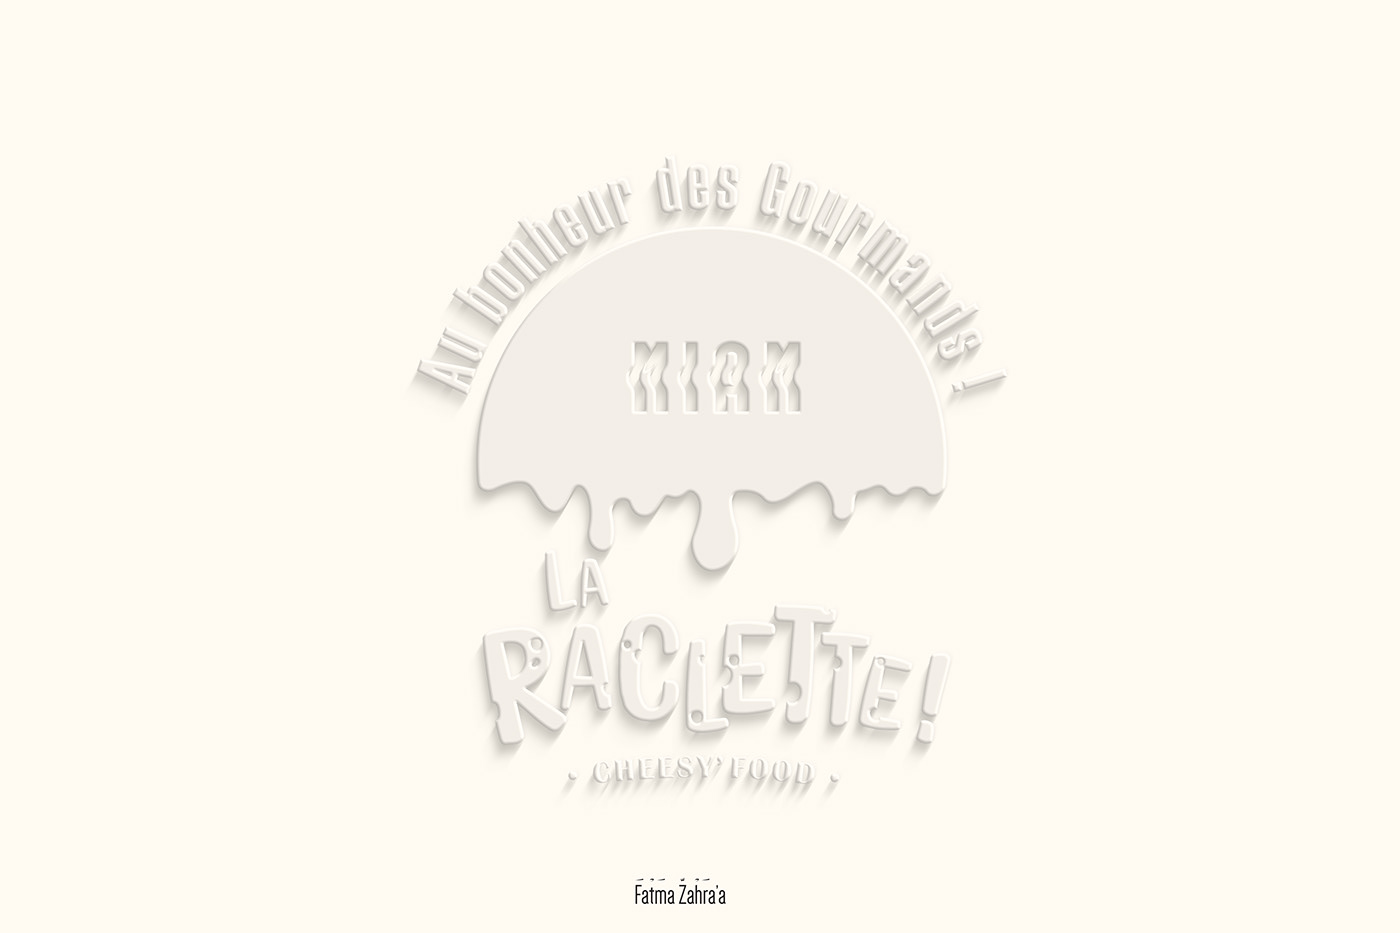 Cheese cheesy food corporate identity Logo Design raclette Sfax think create tunisia visual identity